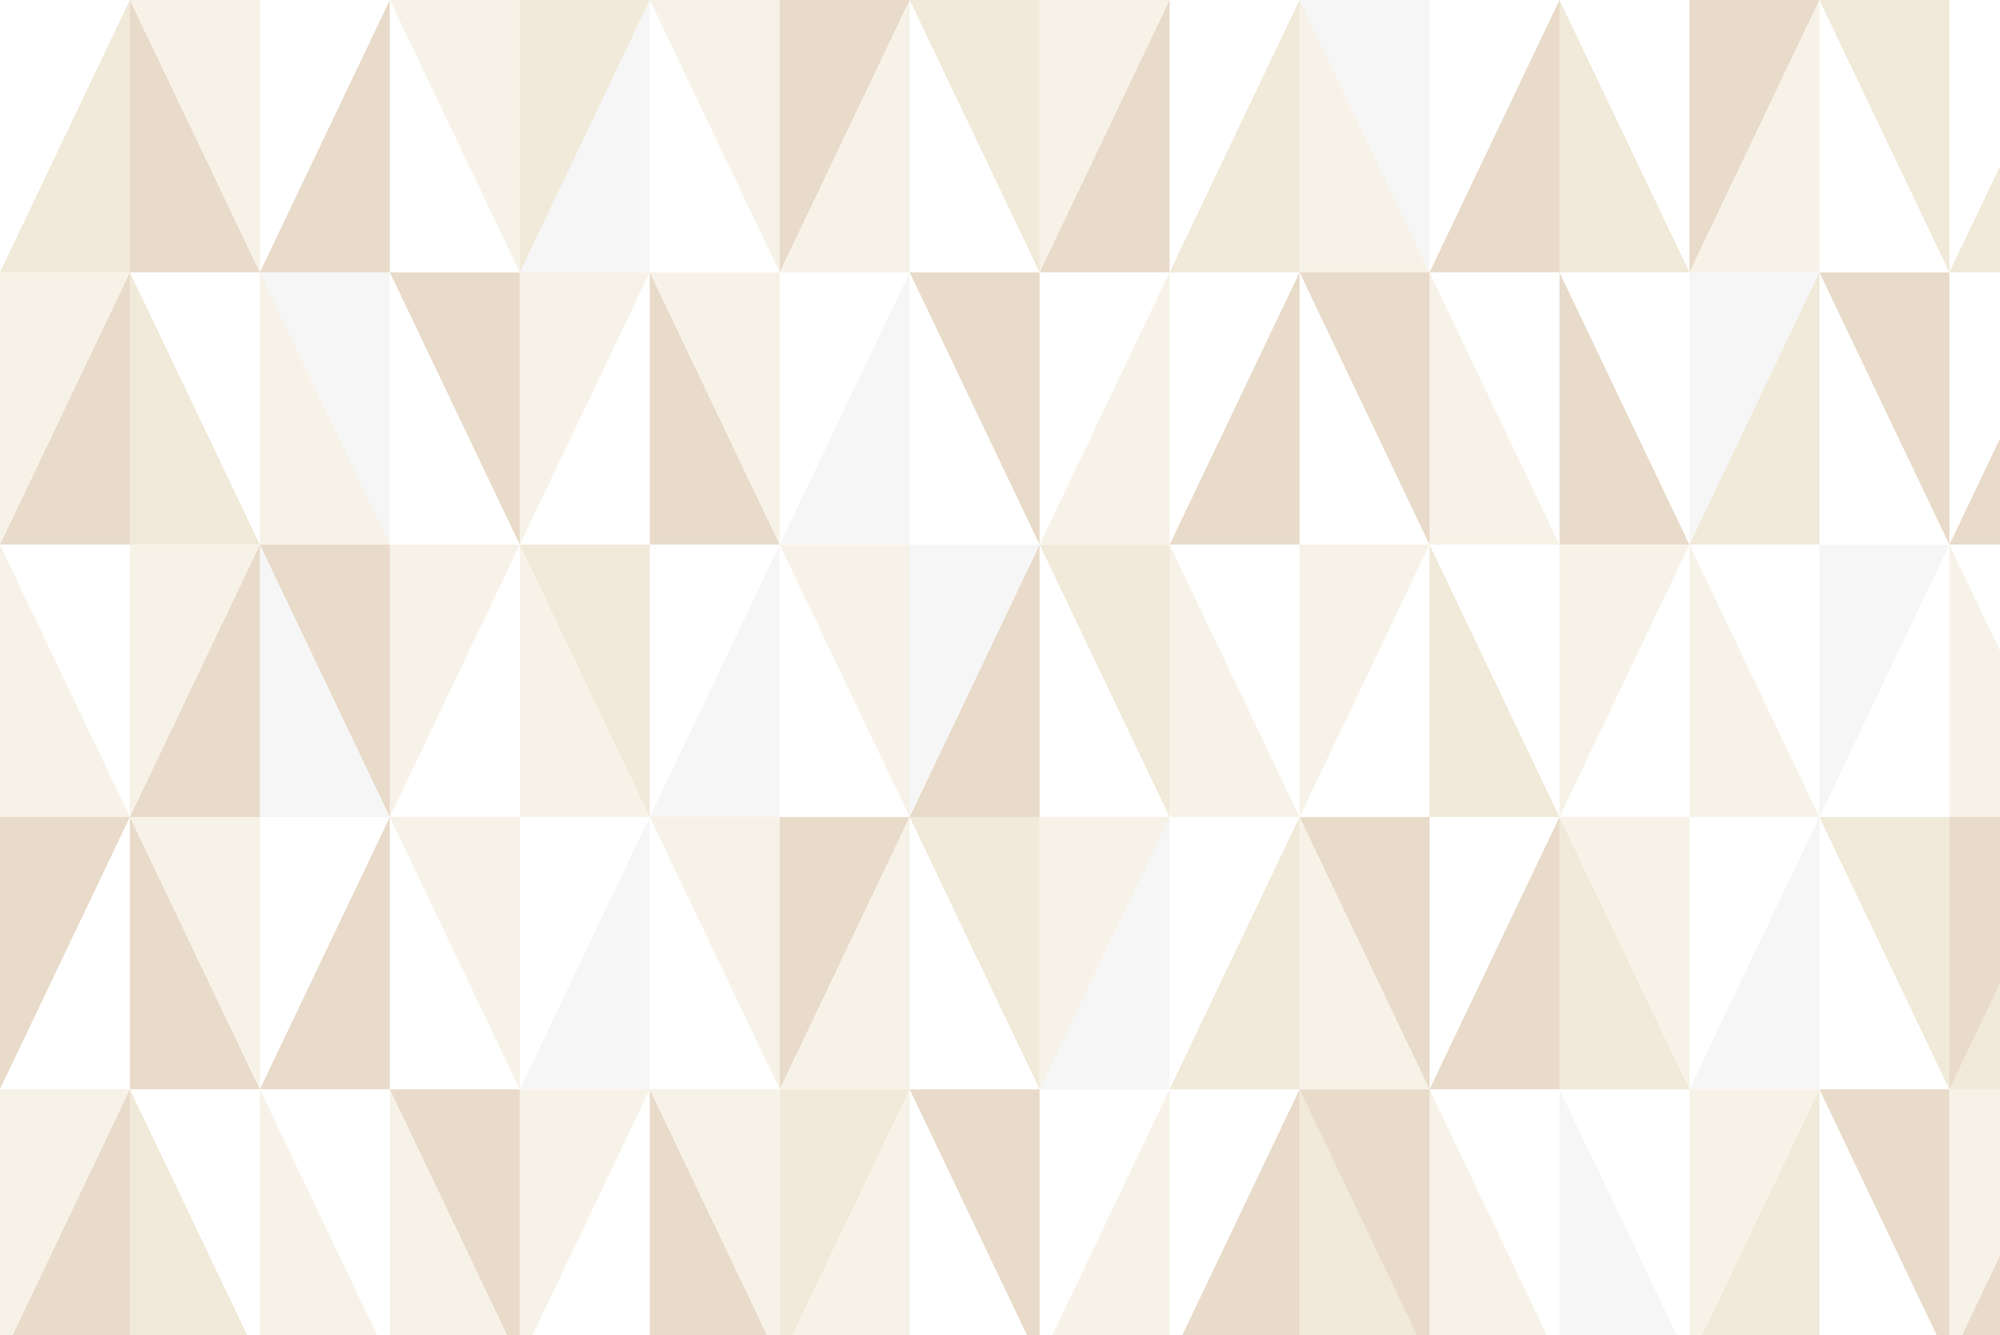             Papel pintado de diseño con pequeños triángulos grises sobre vellón liso nacarado
        